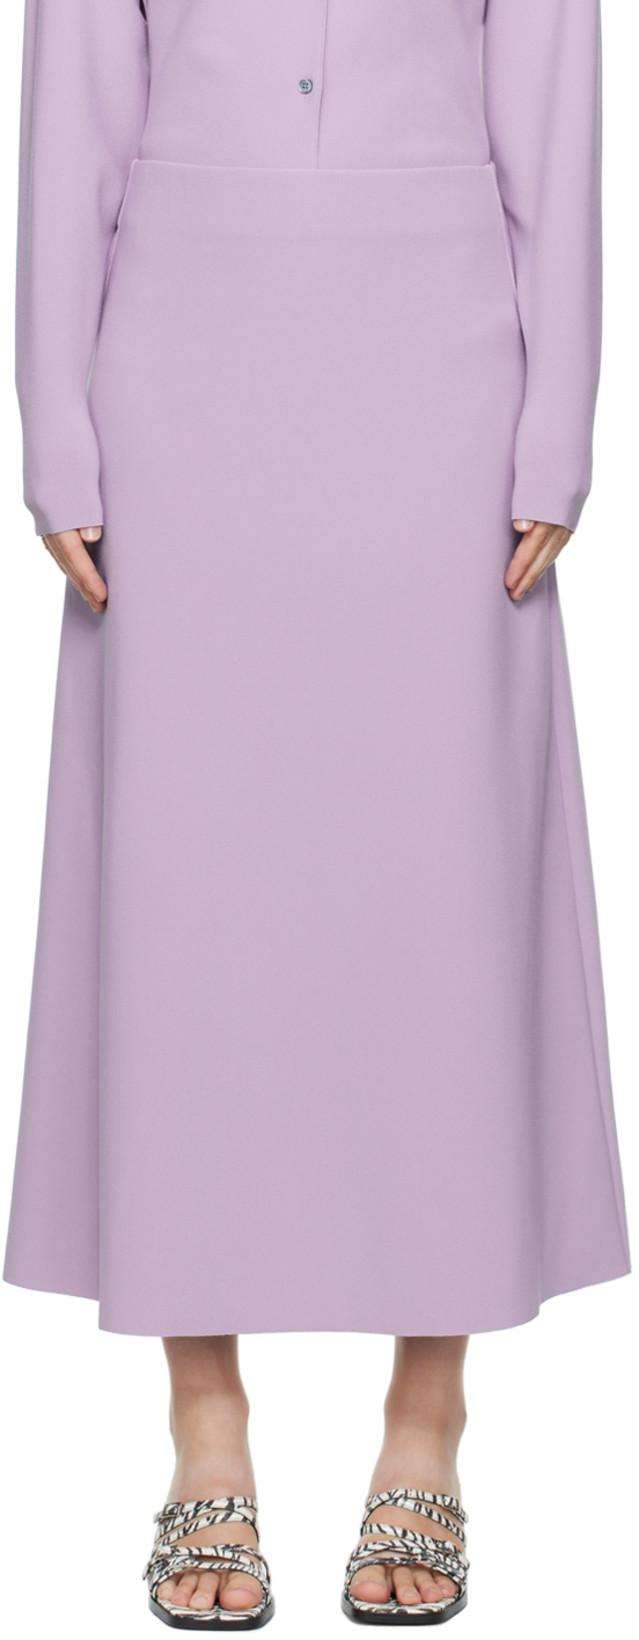 Purple A Midi Skirt by BIRROT